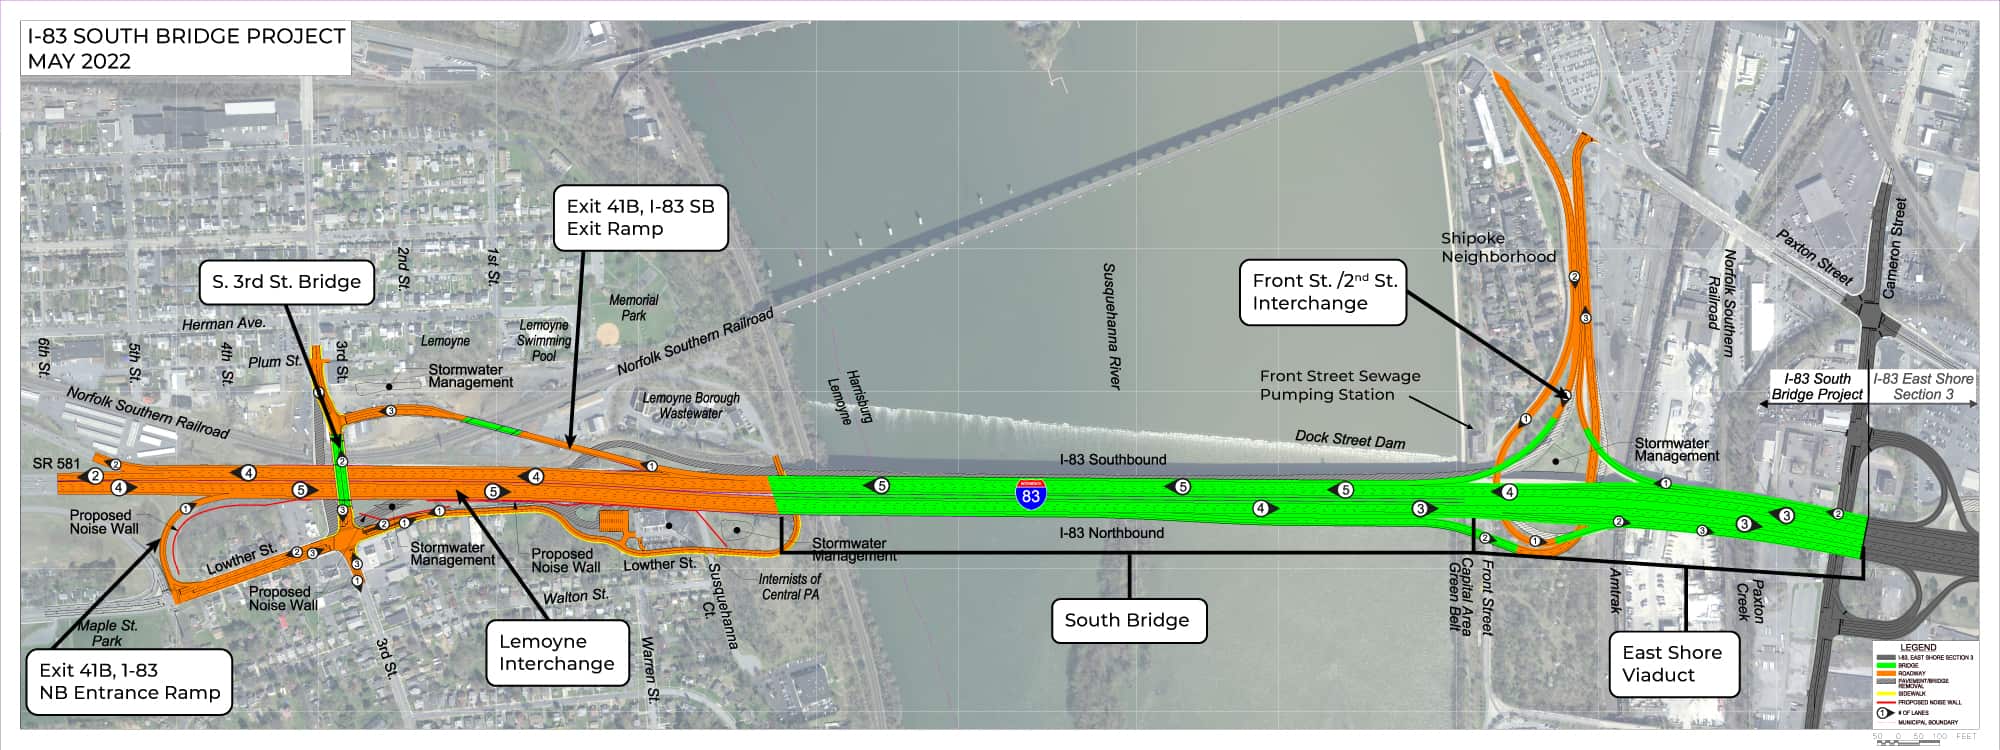 i-83 south bridge project plan